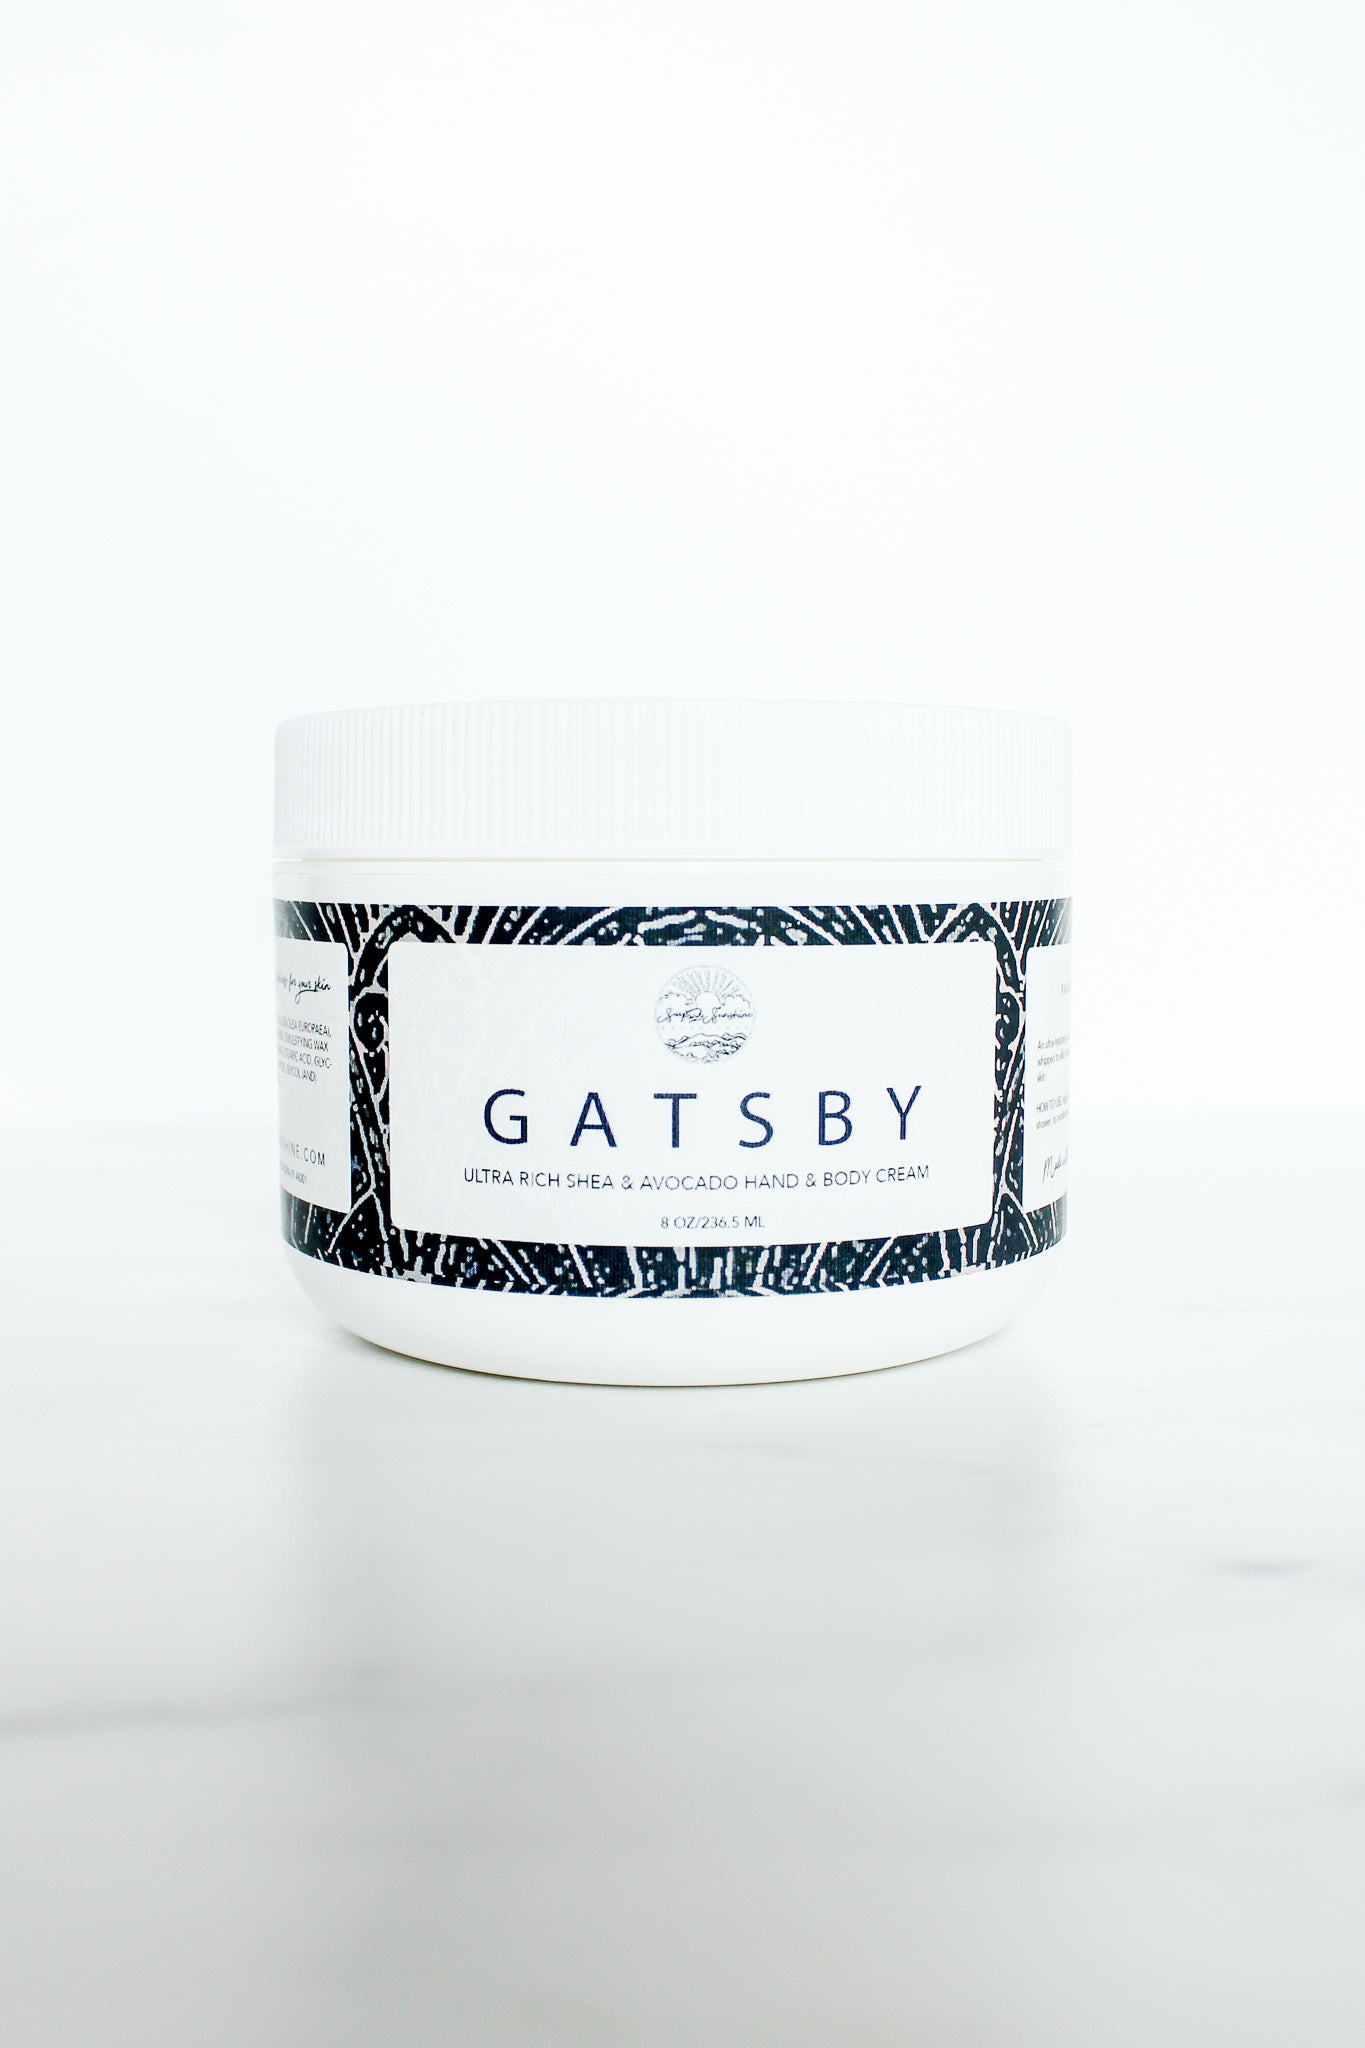 Gatsby - Shea & Avocado Body Cream by